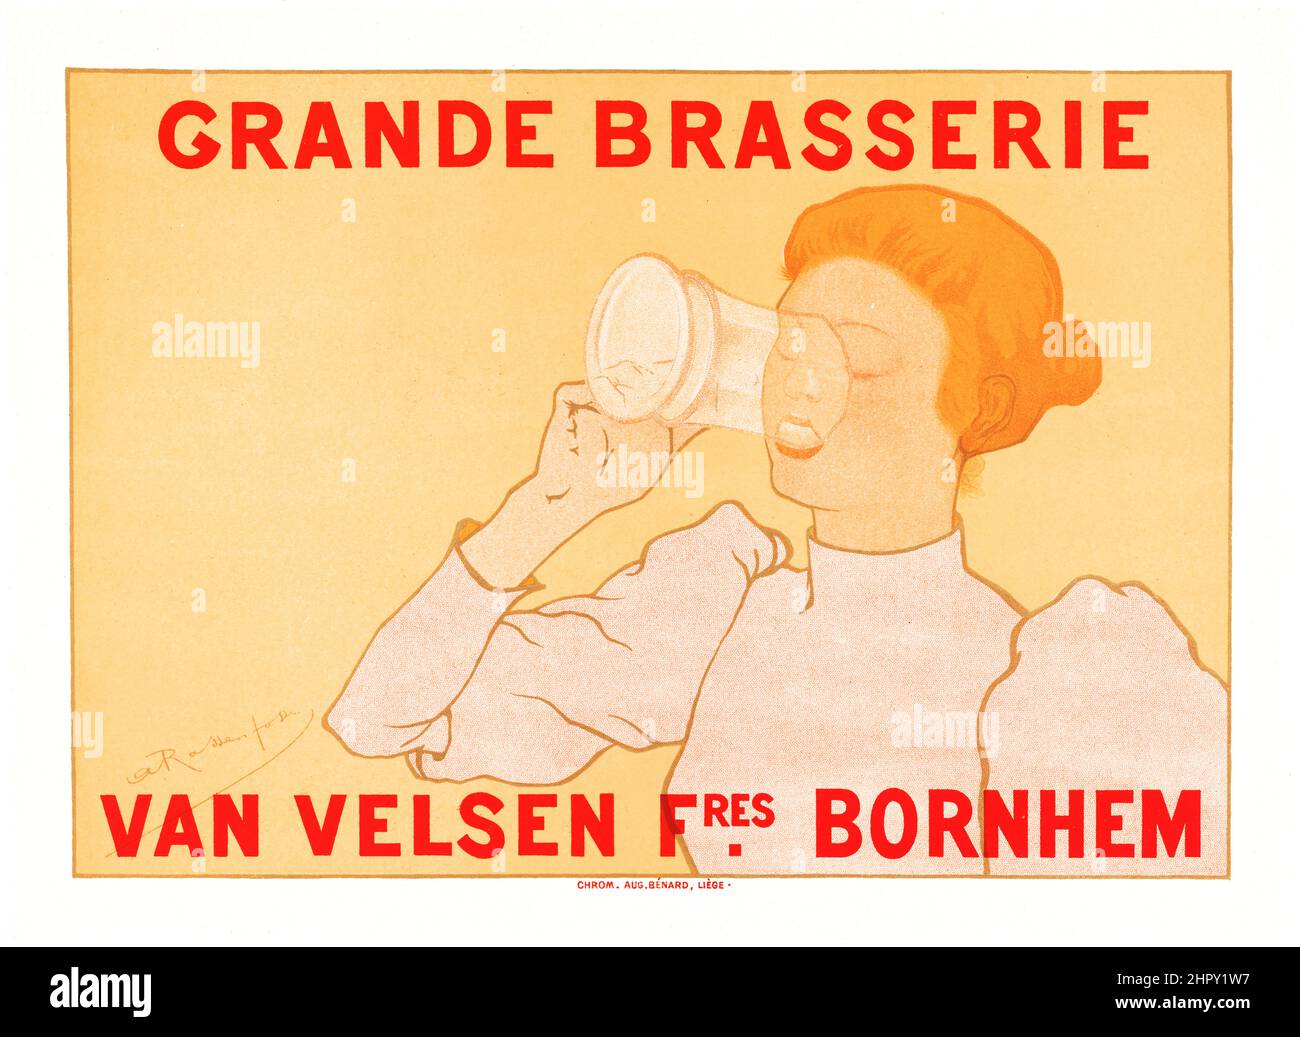 Les Maîtres de l'Affiche, plate 12 - Grande brasserie Van Velsen Fres. Bornhem - Benjamin Gavaudo 1896. Stock Photo